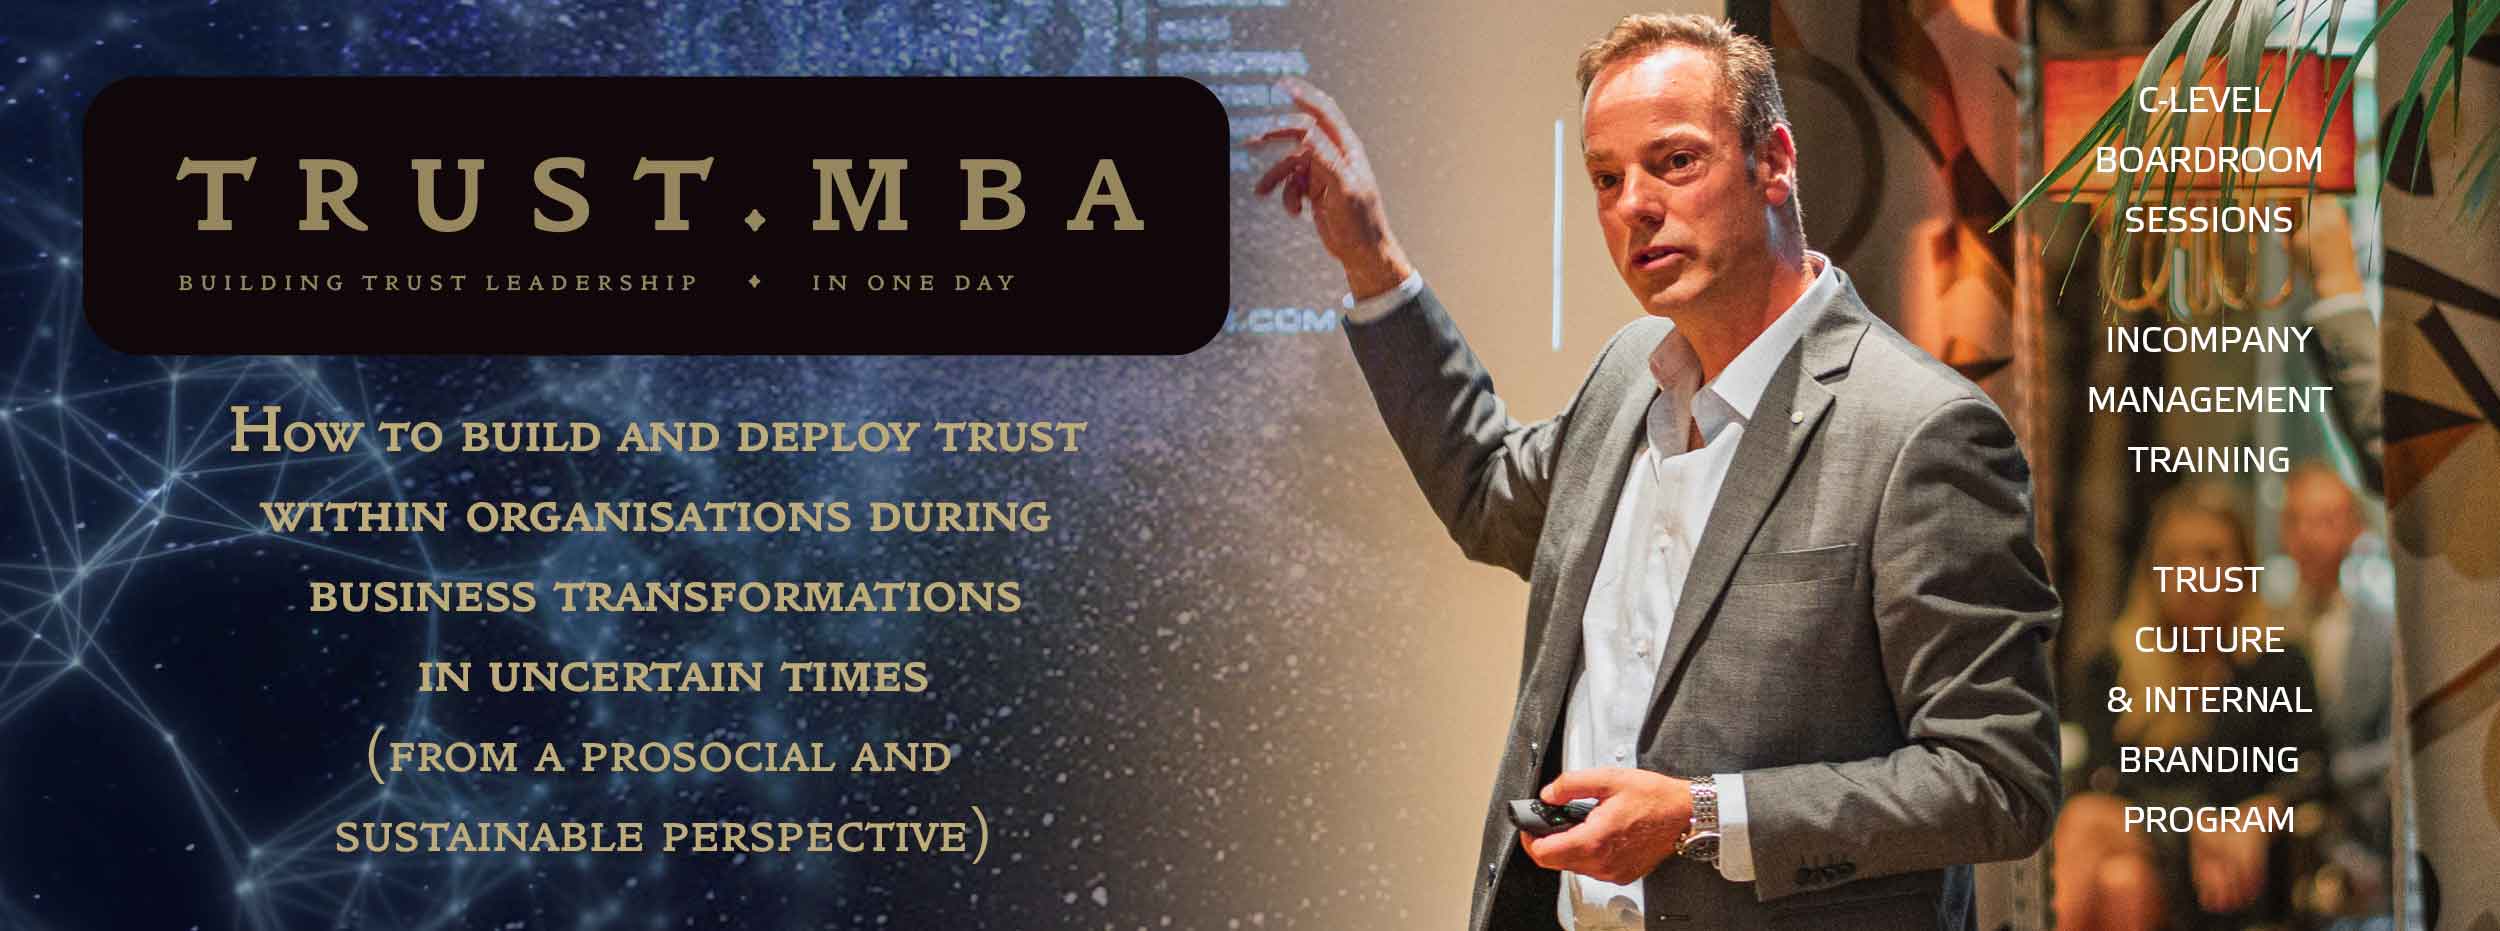 Erik Schoppen - Trust MBA in one day - Corporate Culture - Business Transformation Programm